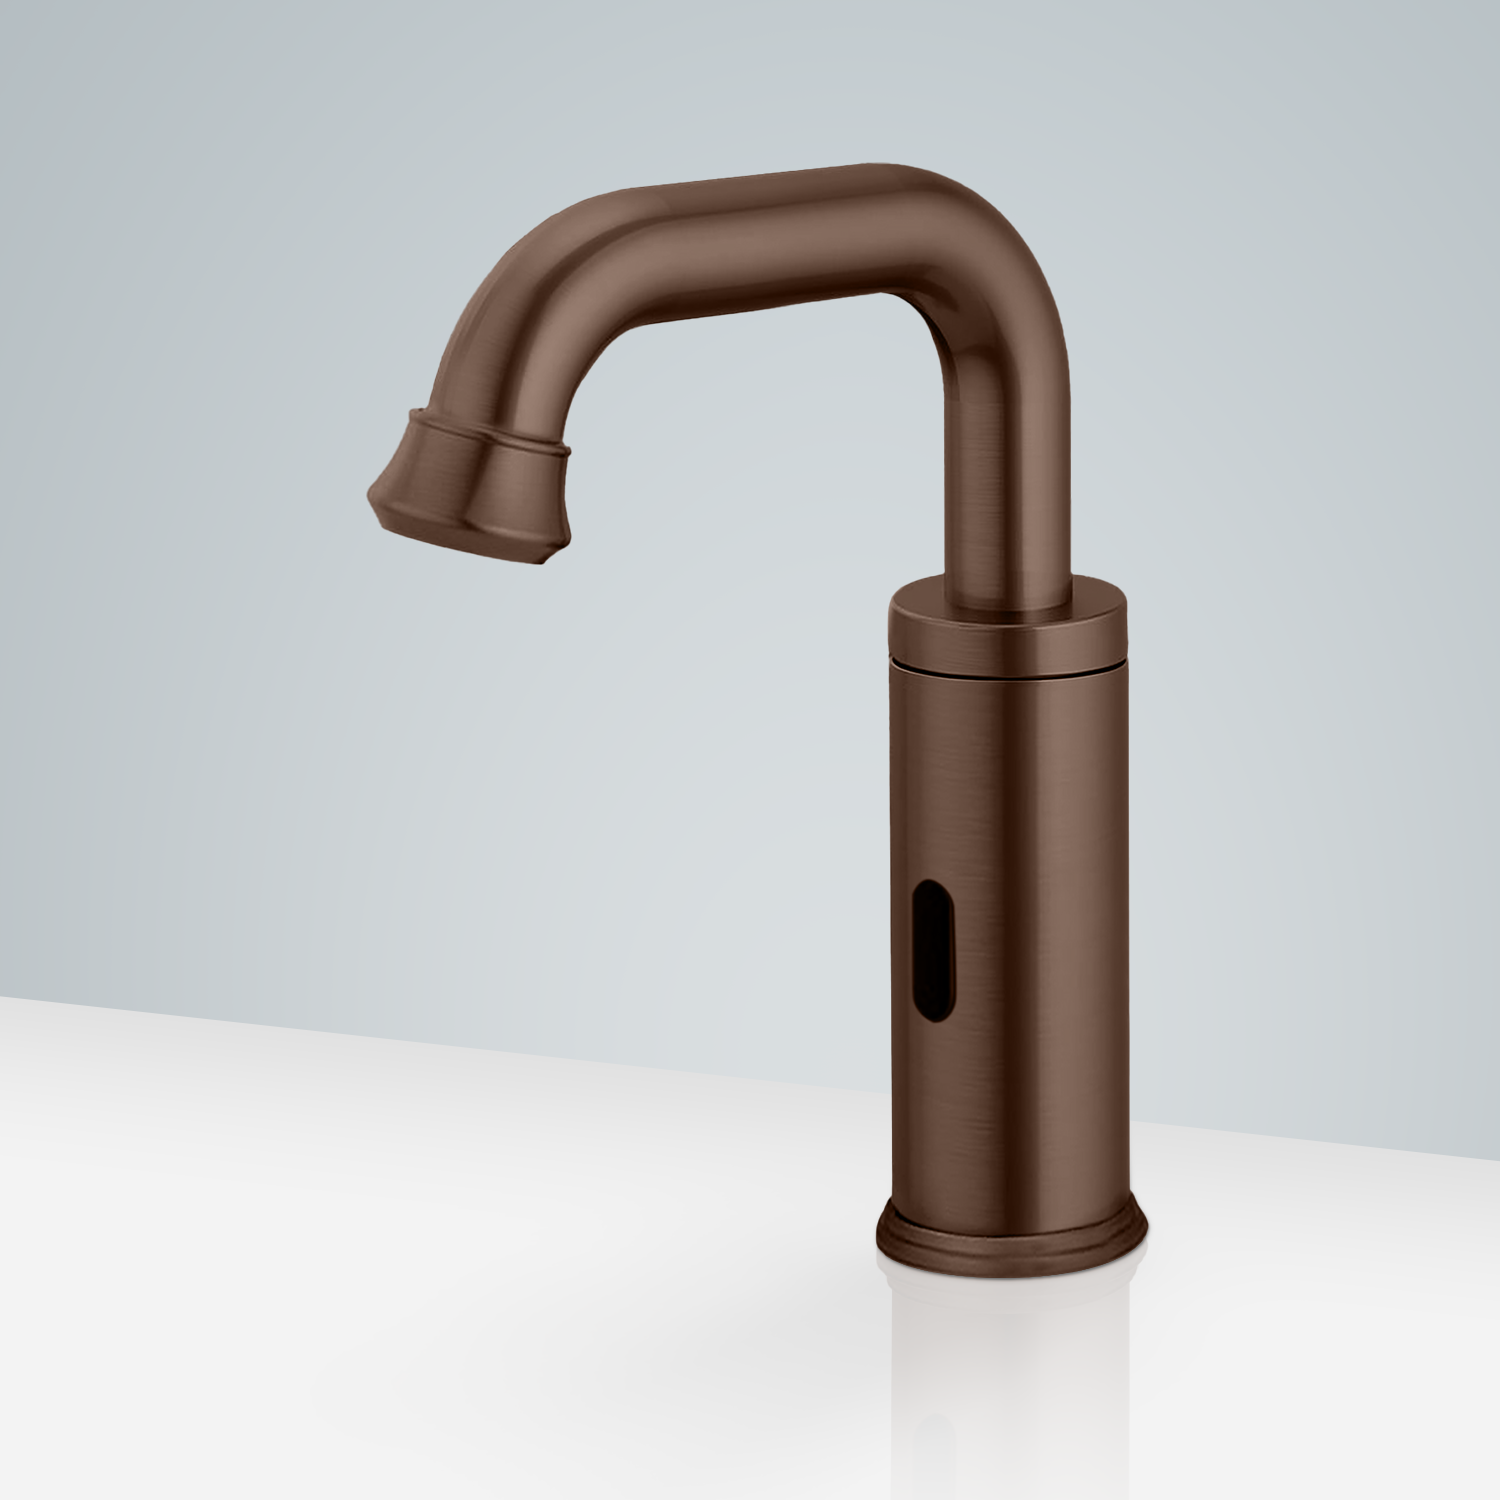 Fontana Commercial Light Oil Rubbed Bronze Touchless Automatic Sensor Faucet